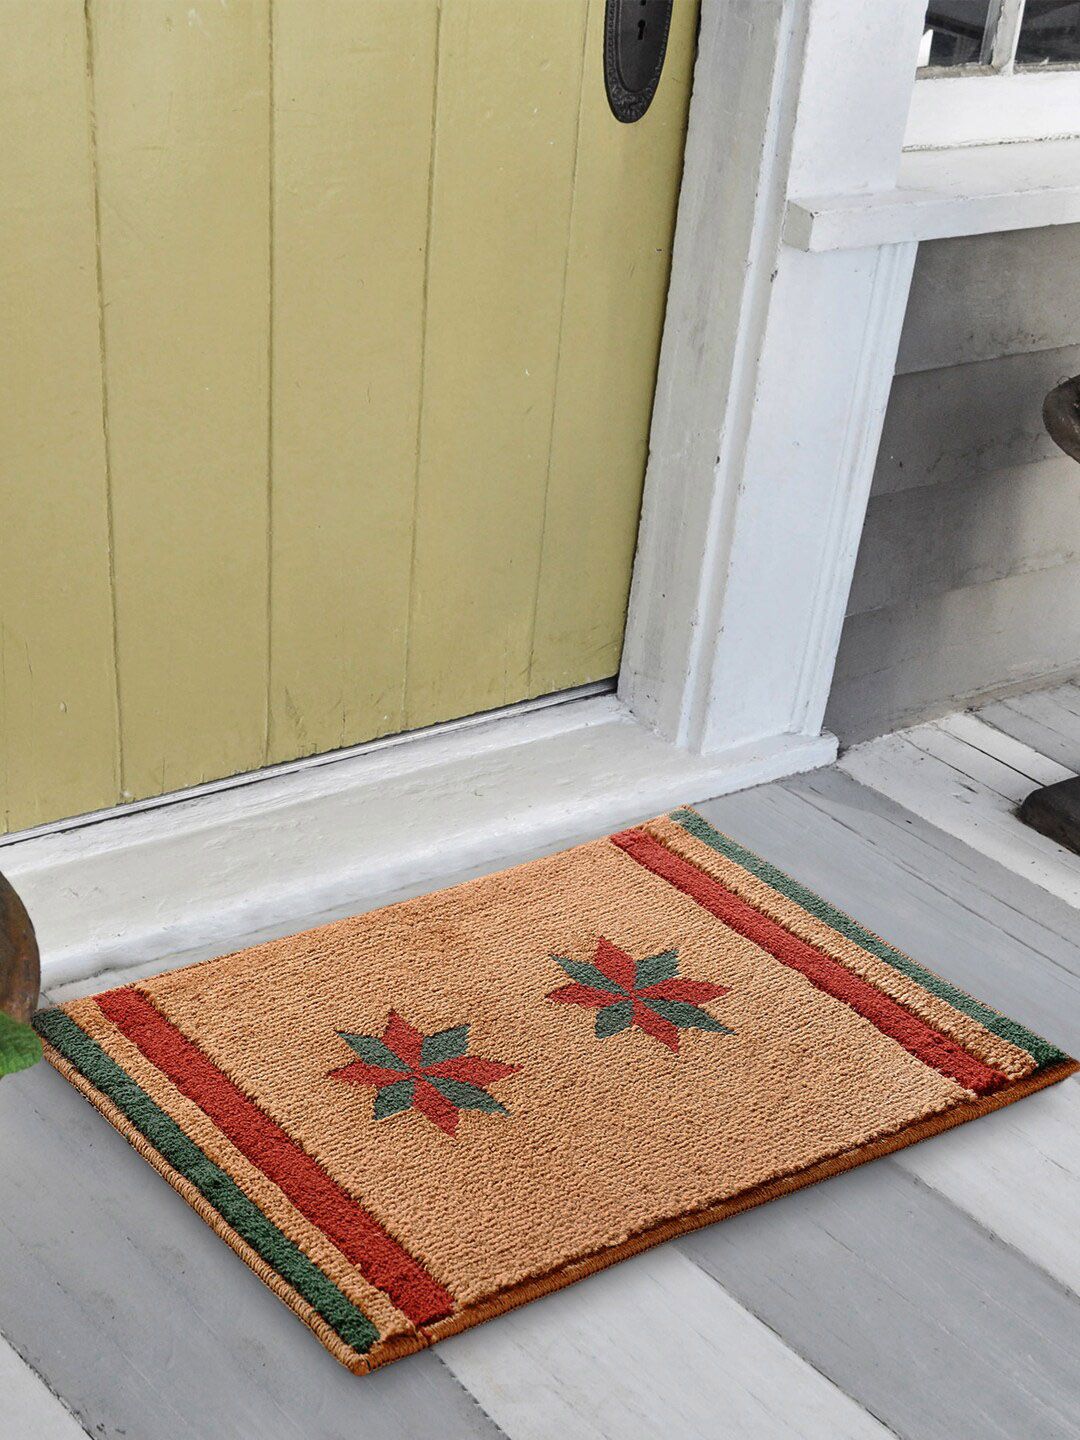 Saral Home Beige & Red Geometric Printed Rectangular Ani-Skid Doormat Price in India